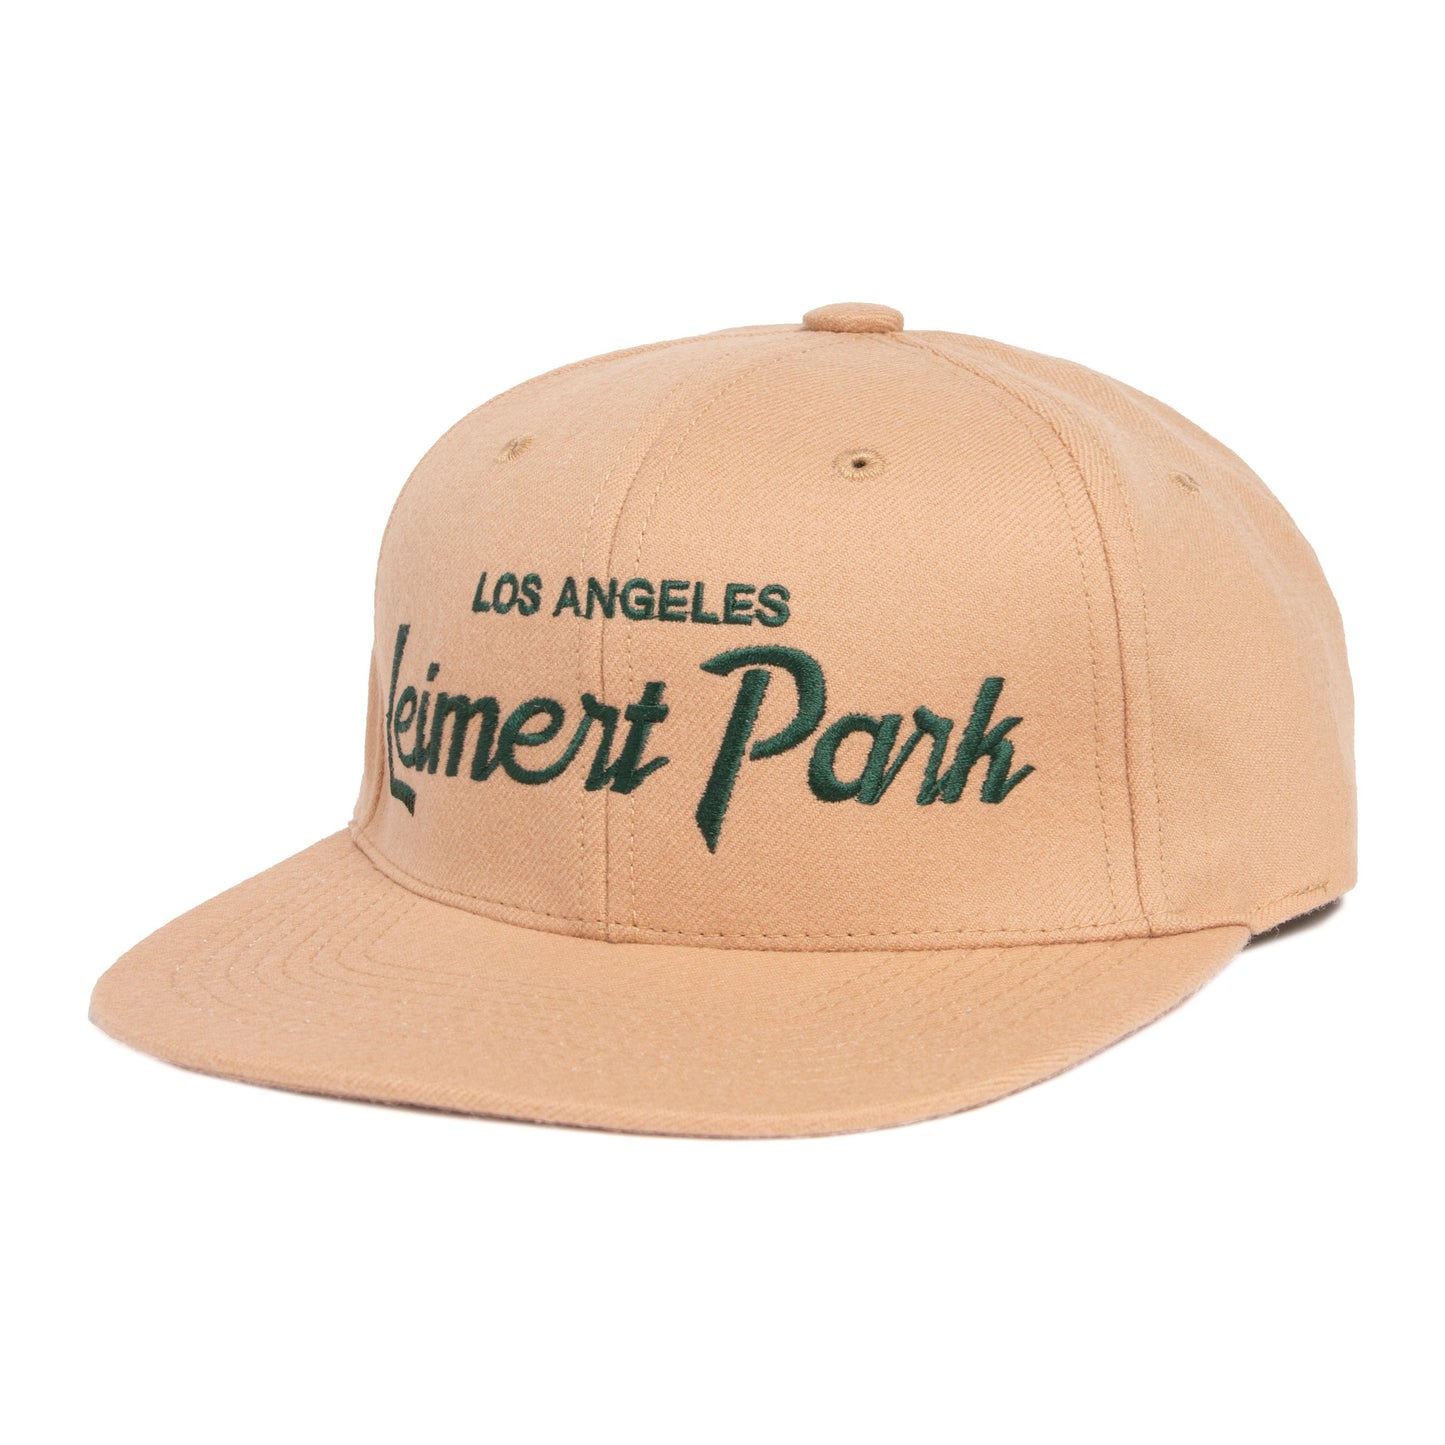 Leimert Park Snapback Hat